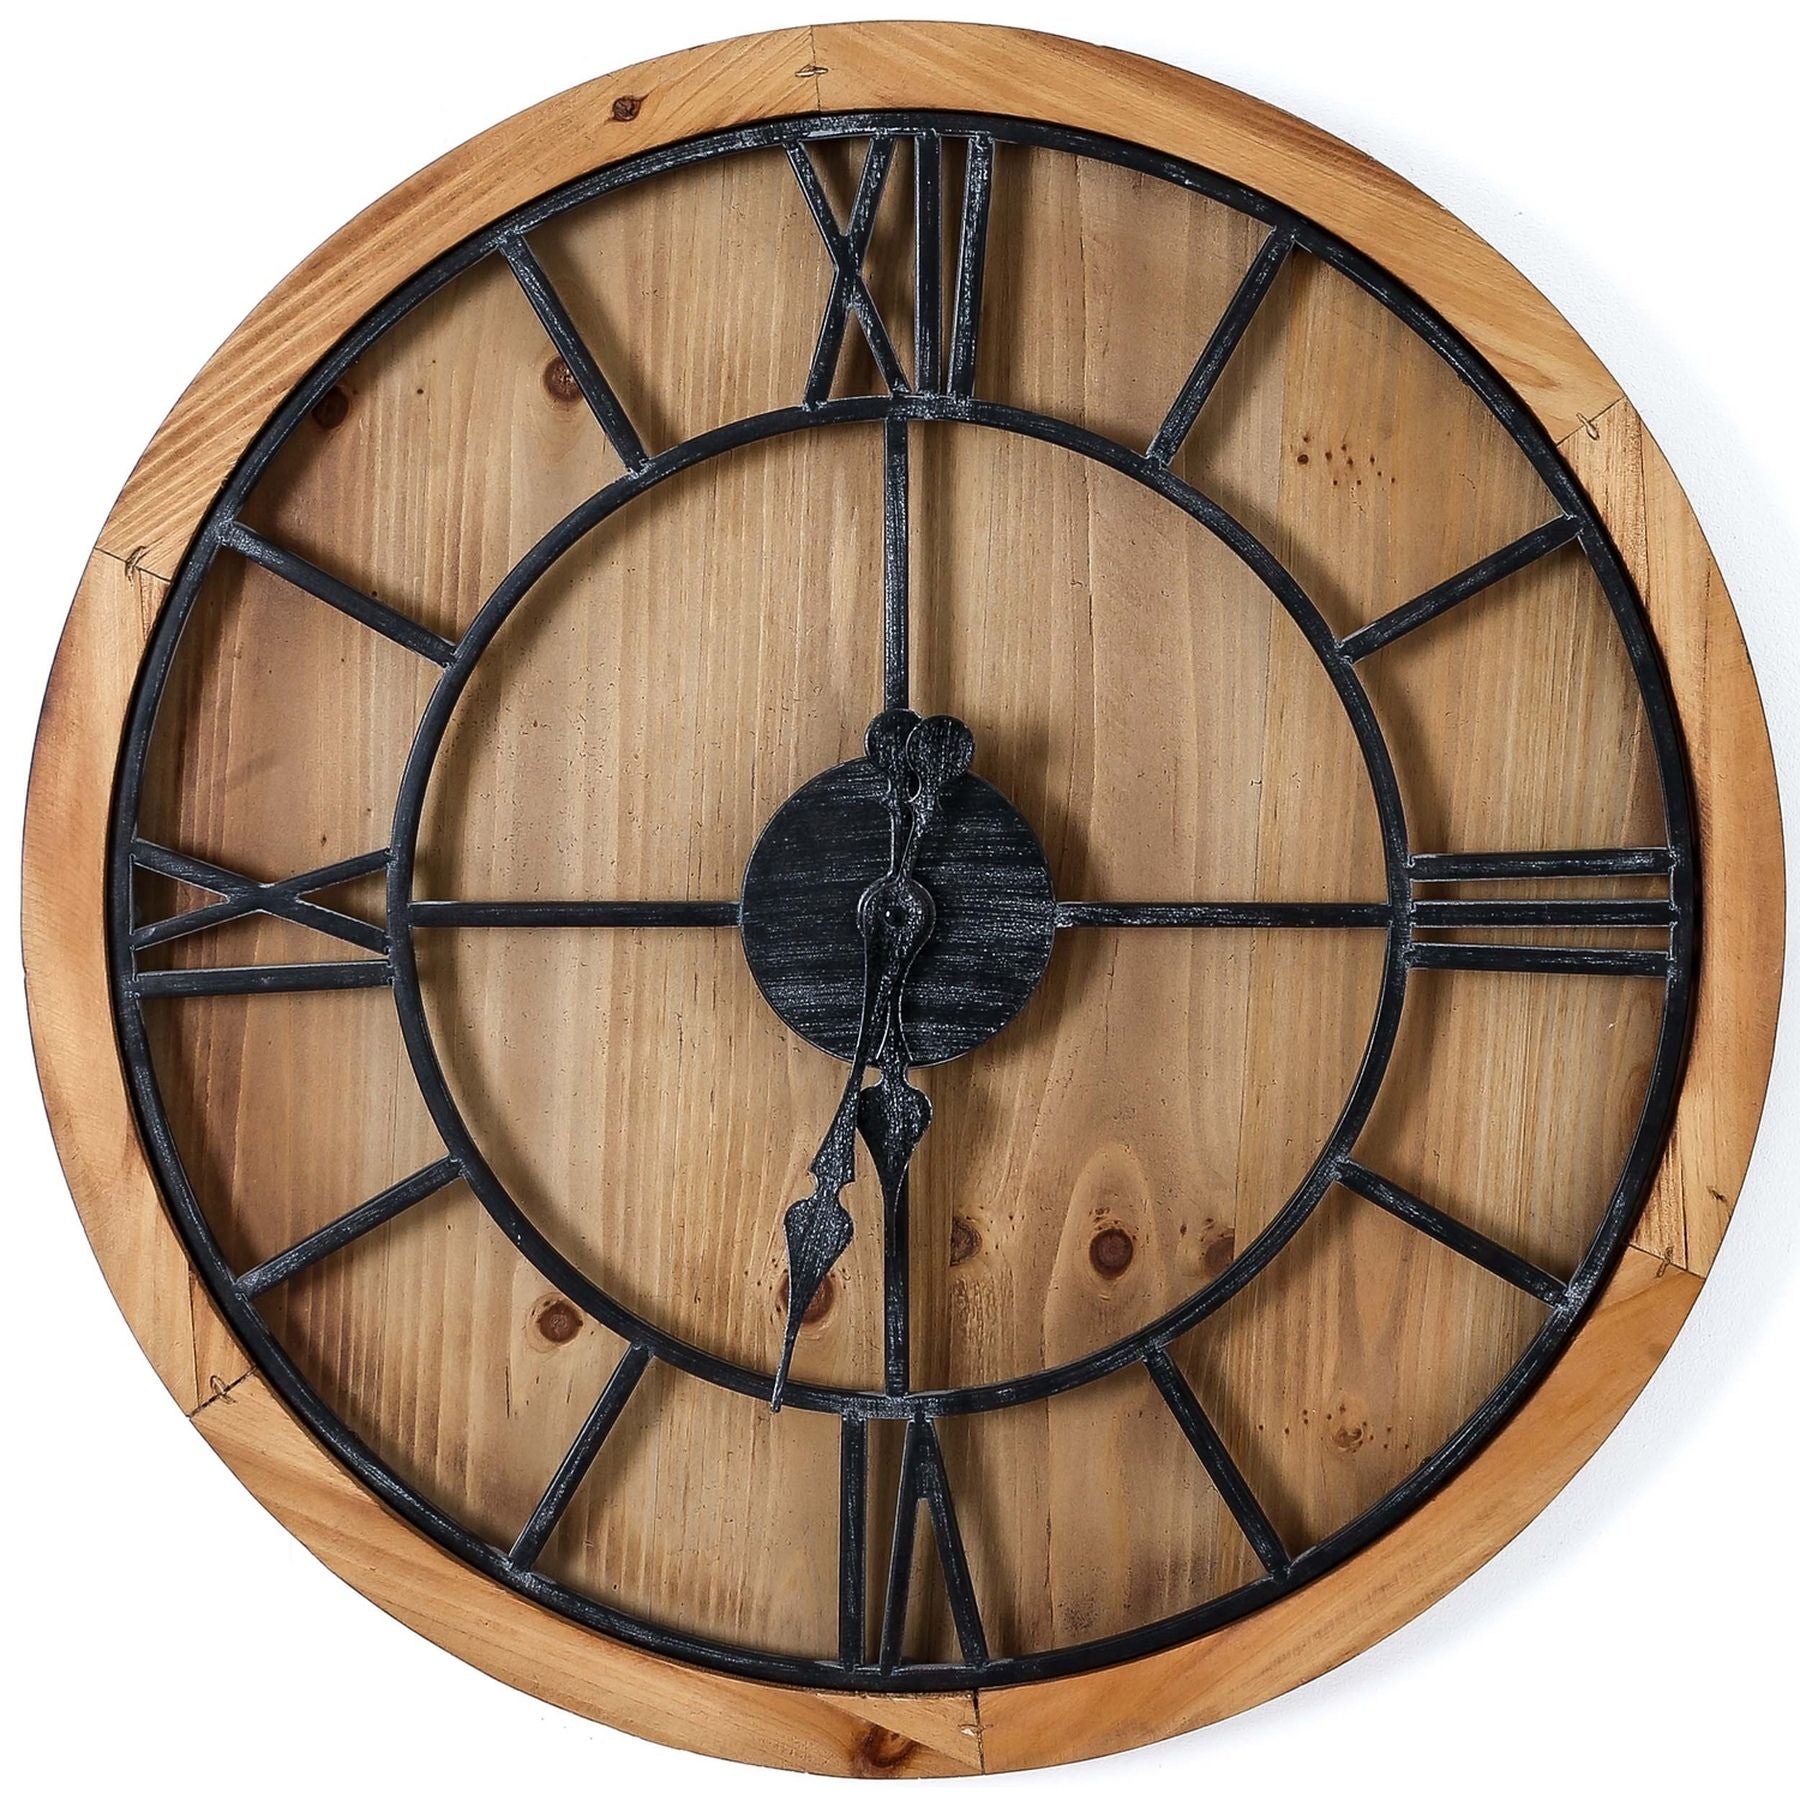 View Williston Wooden Wall Clock information